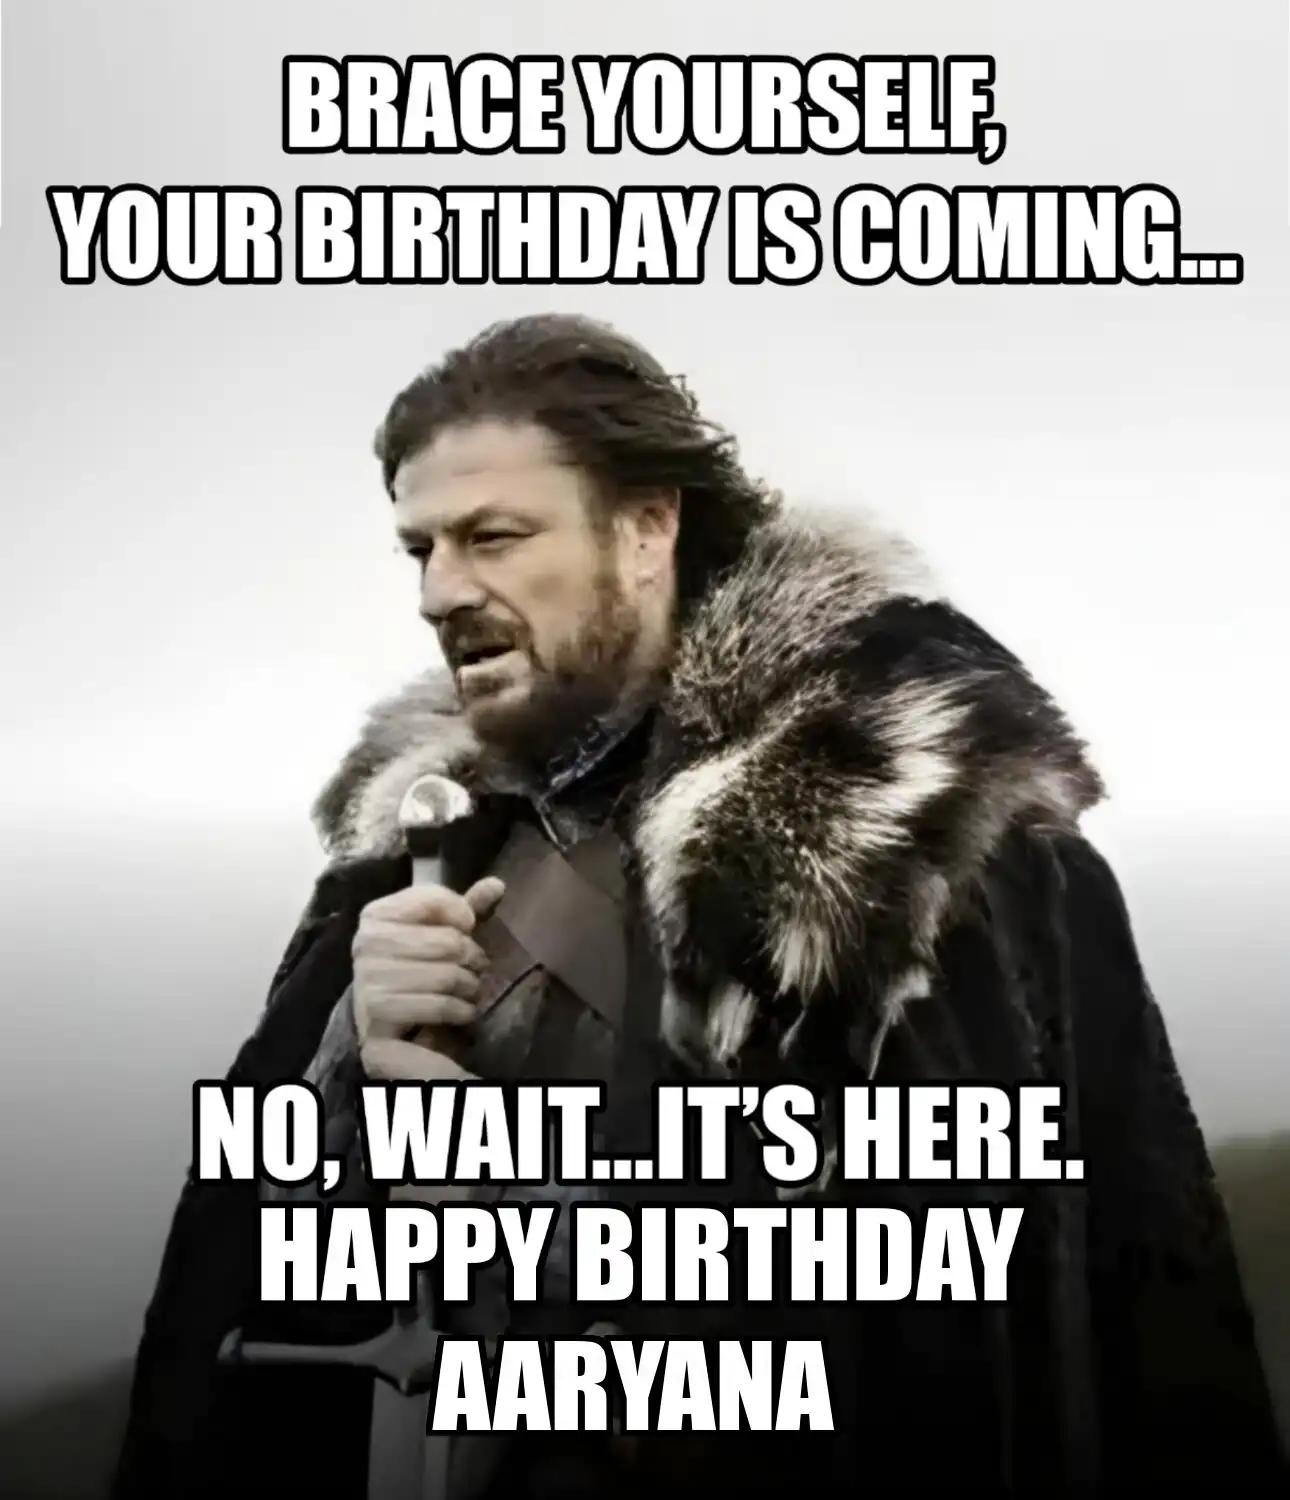 Happy Birthday Aaryana Brace Yourself Your Birthday Is Coming Meme